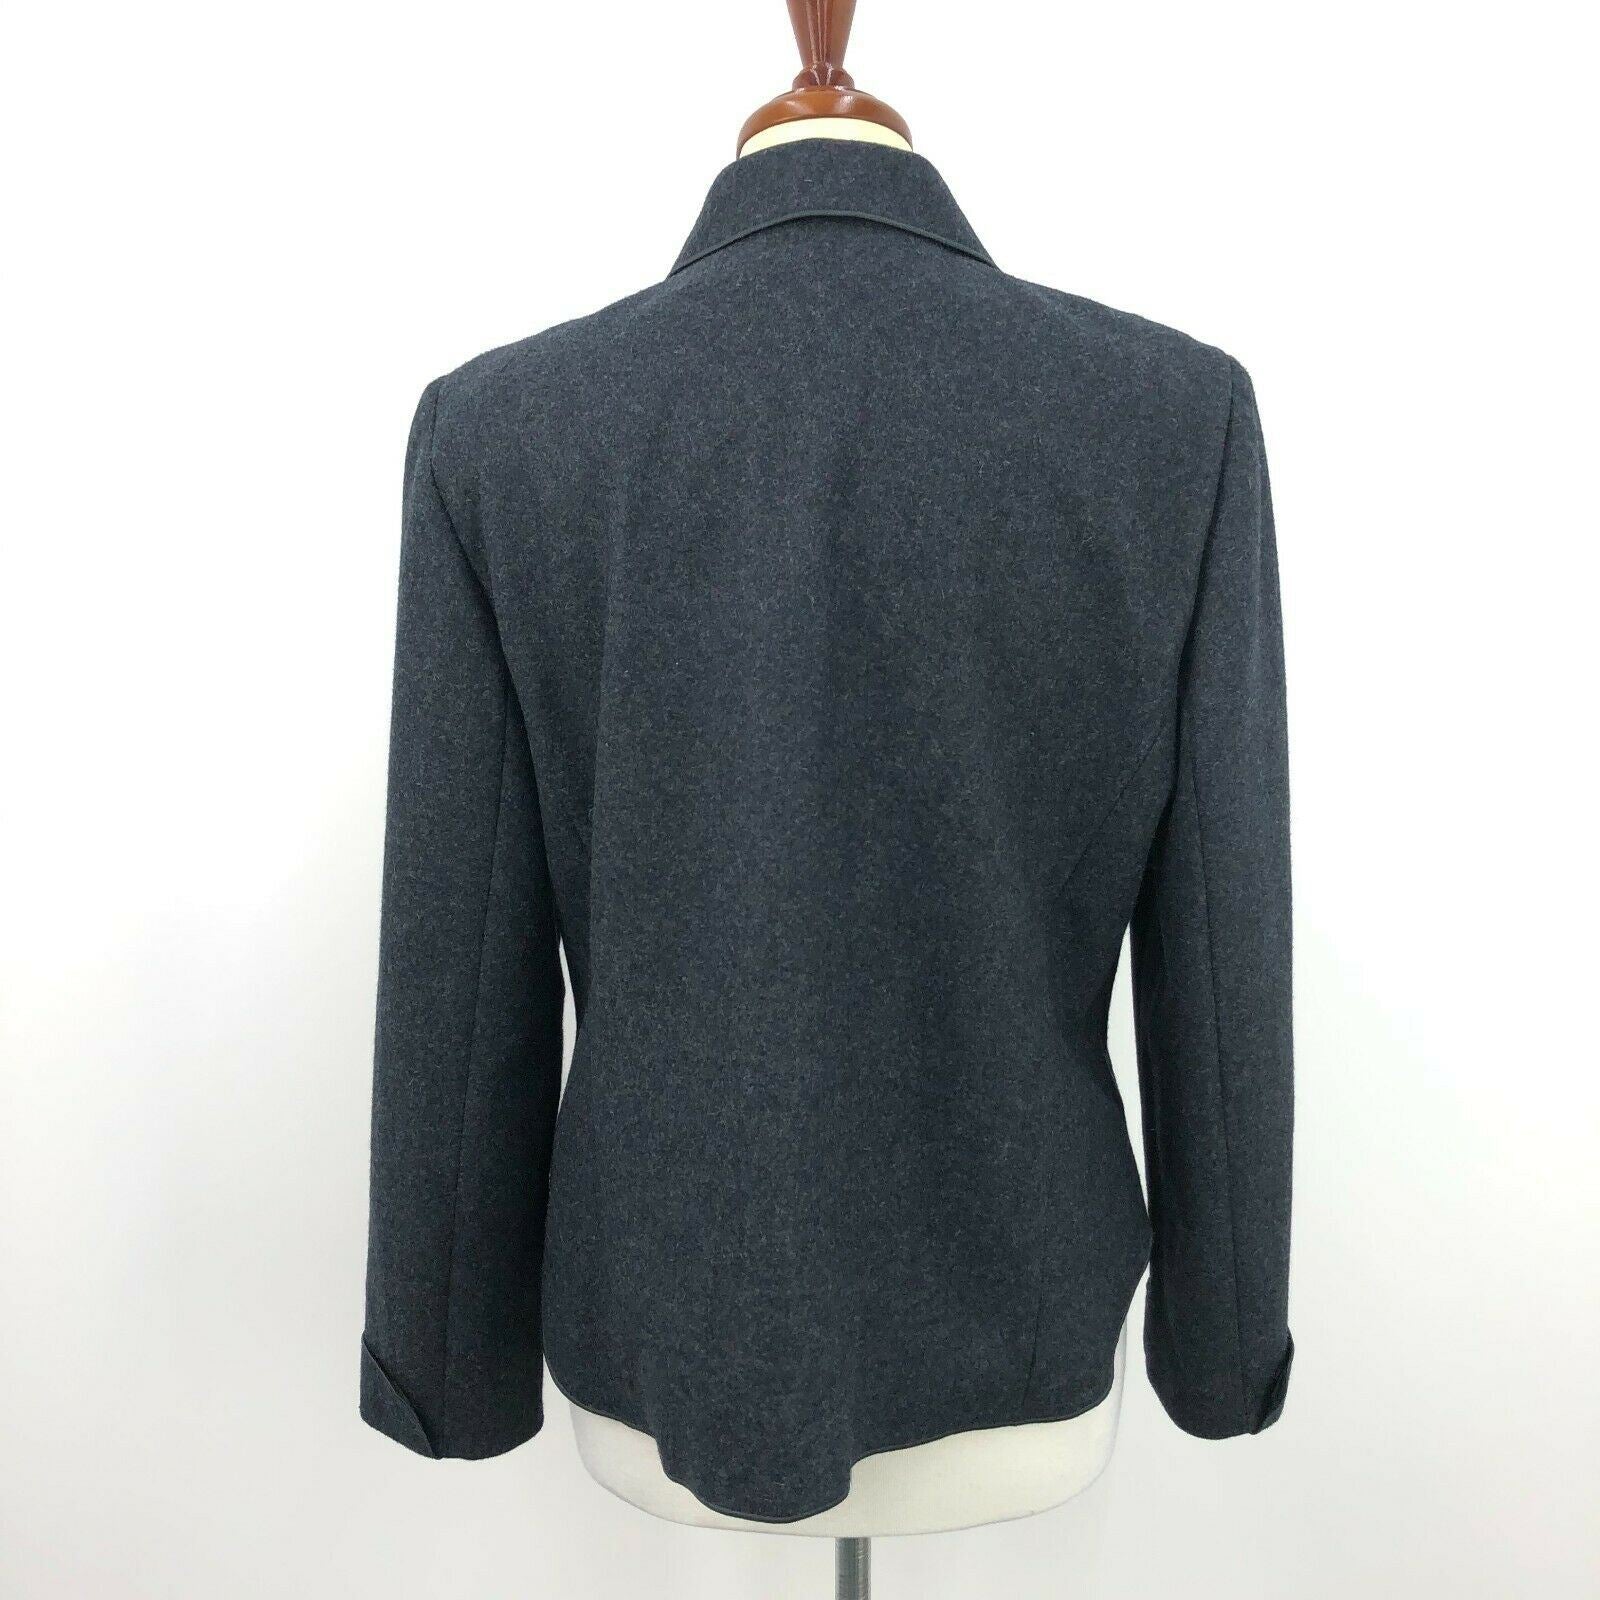 Harve Benard Sport Charcoal Wool Blend Pant Suit Women Jacket Sz